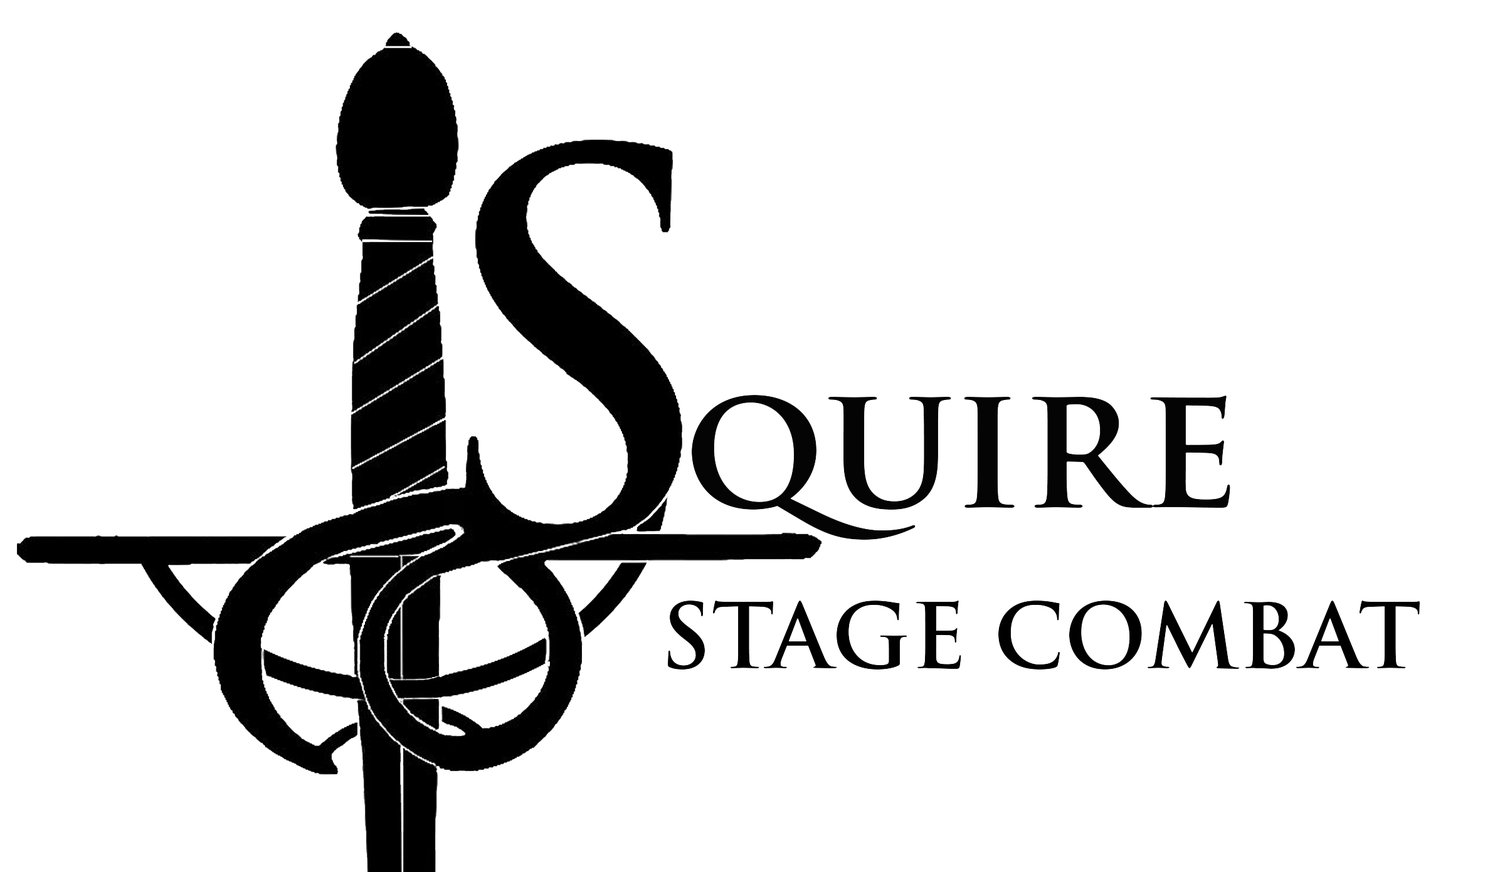 Squire Stage Combat